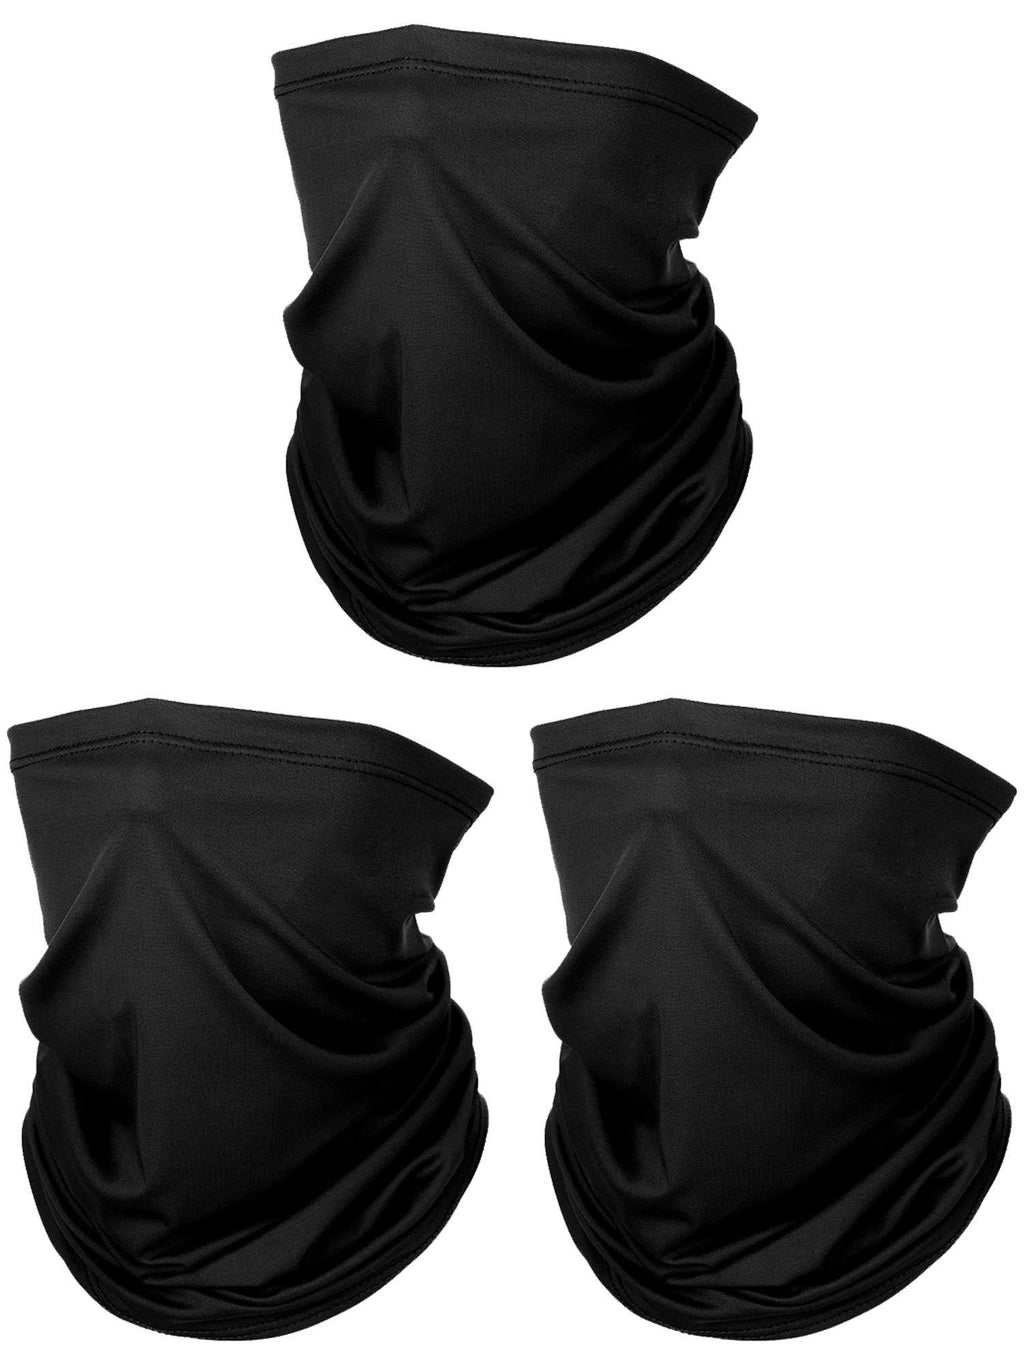 [Australia] - 3 Pieces Men's Neck Gaiter Summer Sunscreen Neck Gaiter Lightweight Sun Mask for Outdoor Activities Black 